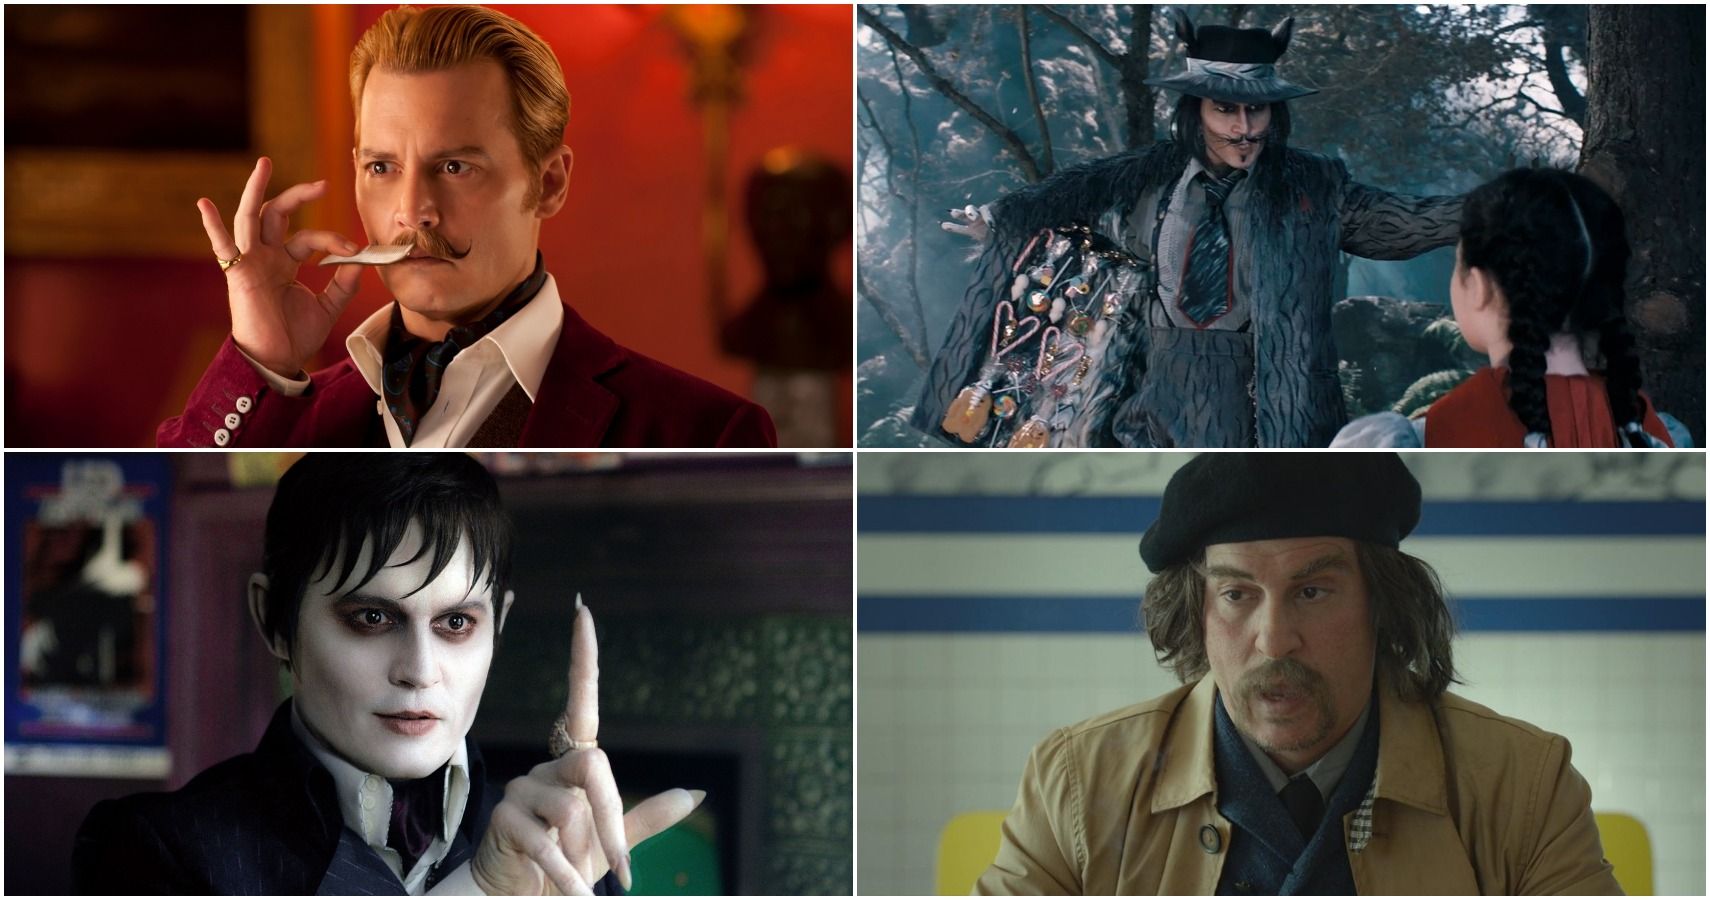 Johnny Depp His 5 Best & 5 Worst Roles (According To IMDB)